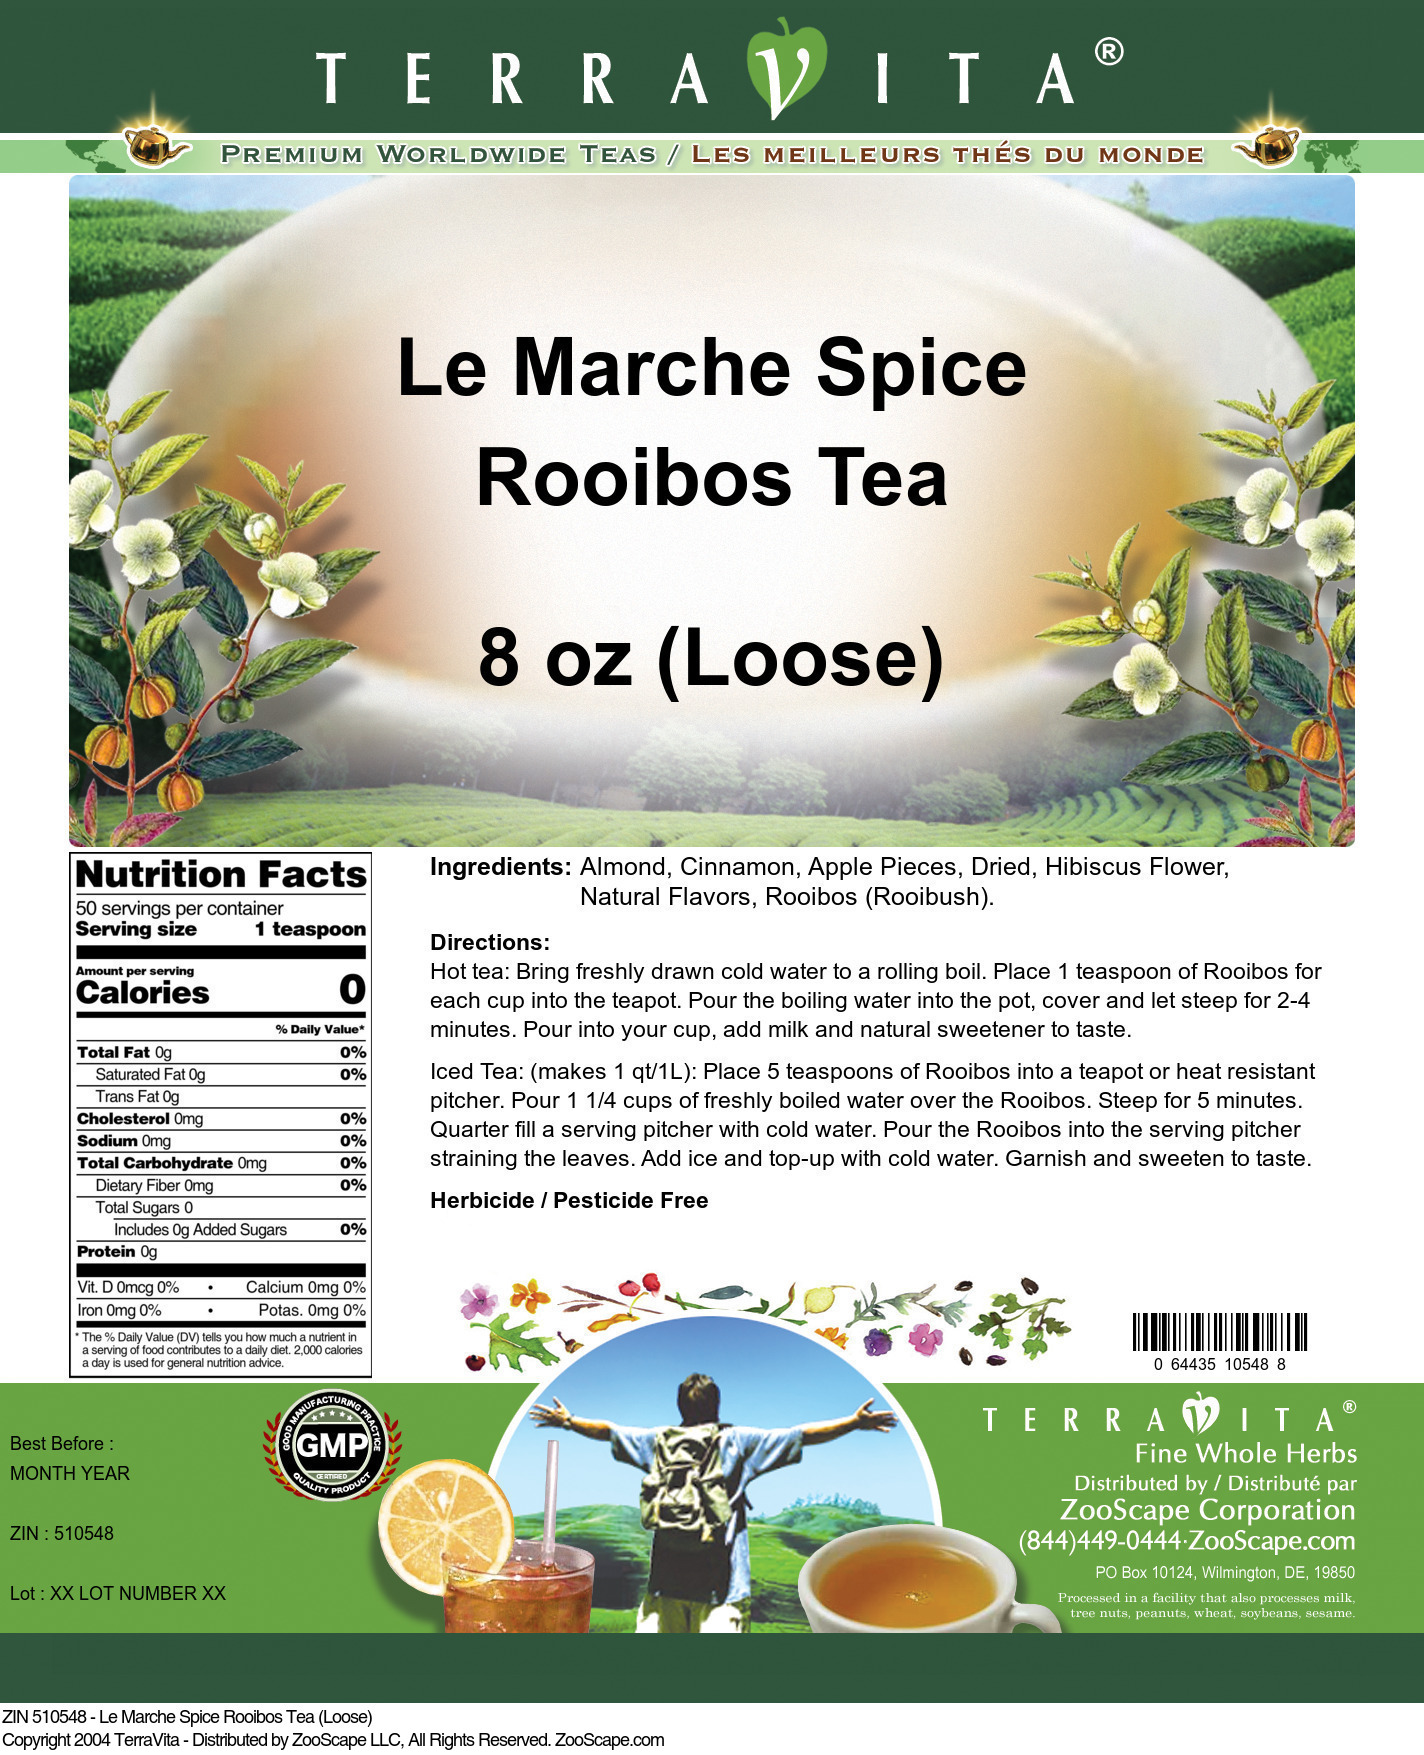 Le Marche Spice Rooibos Tea (Loose) - Label